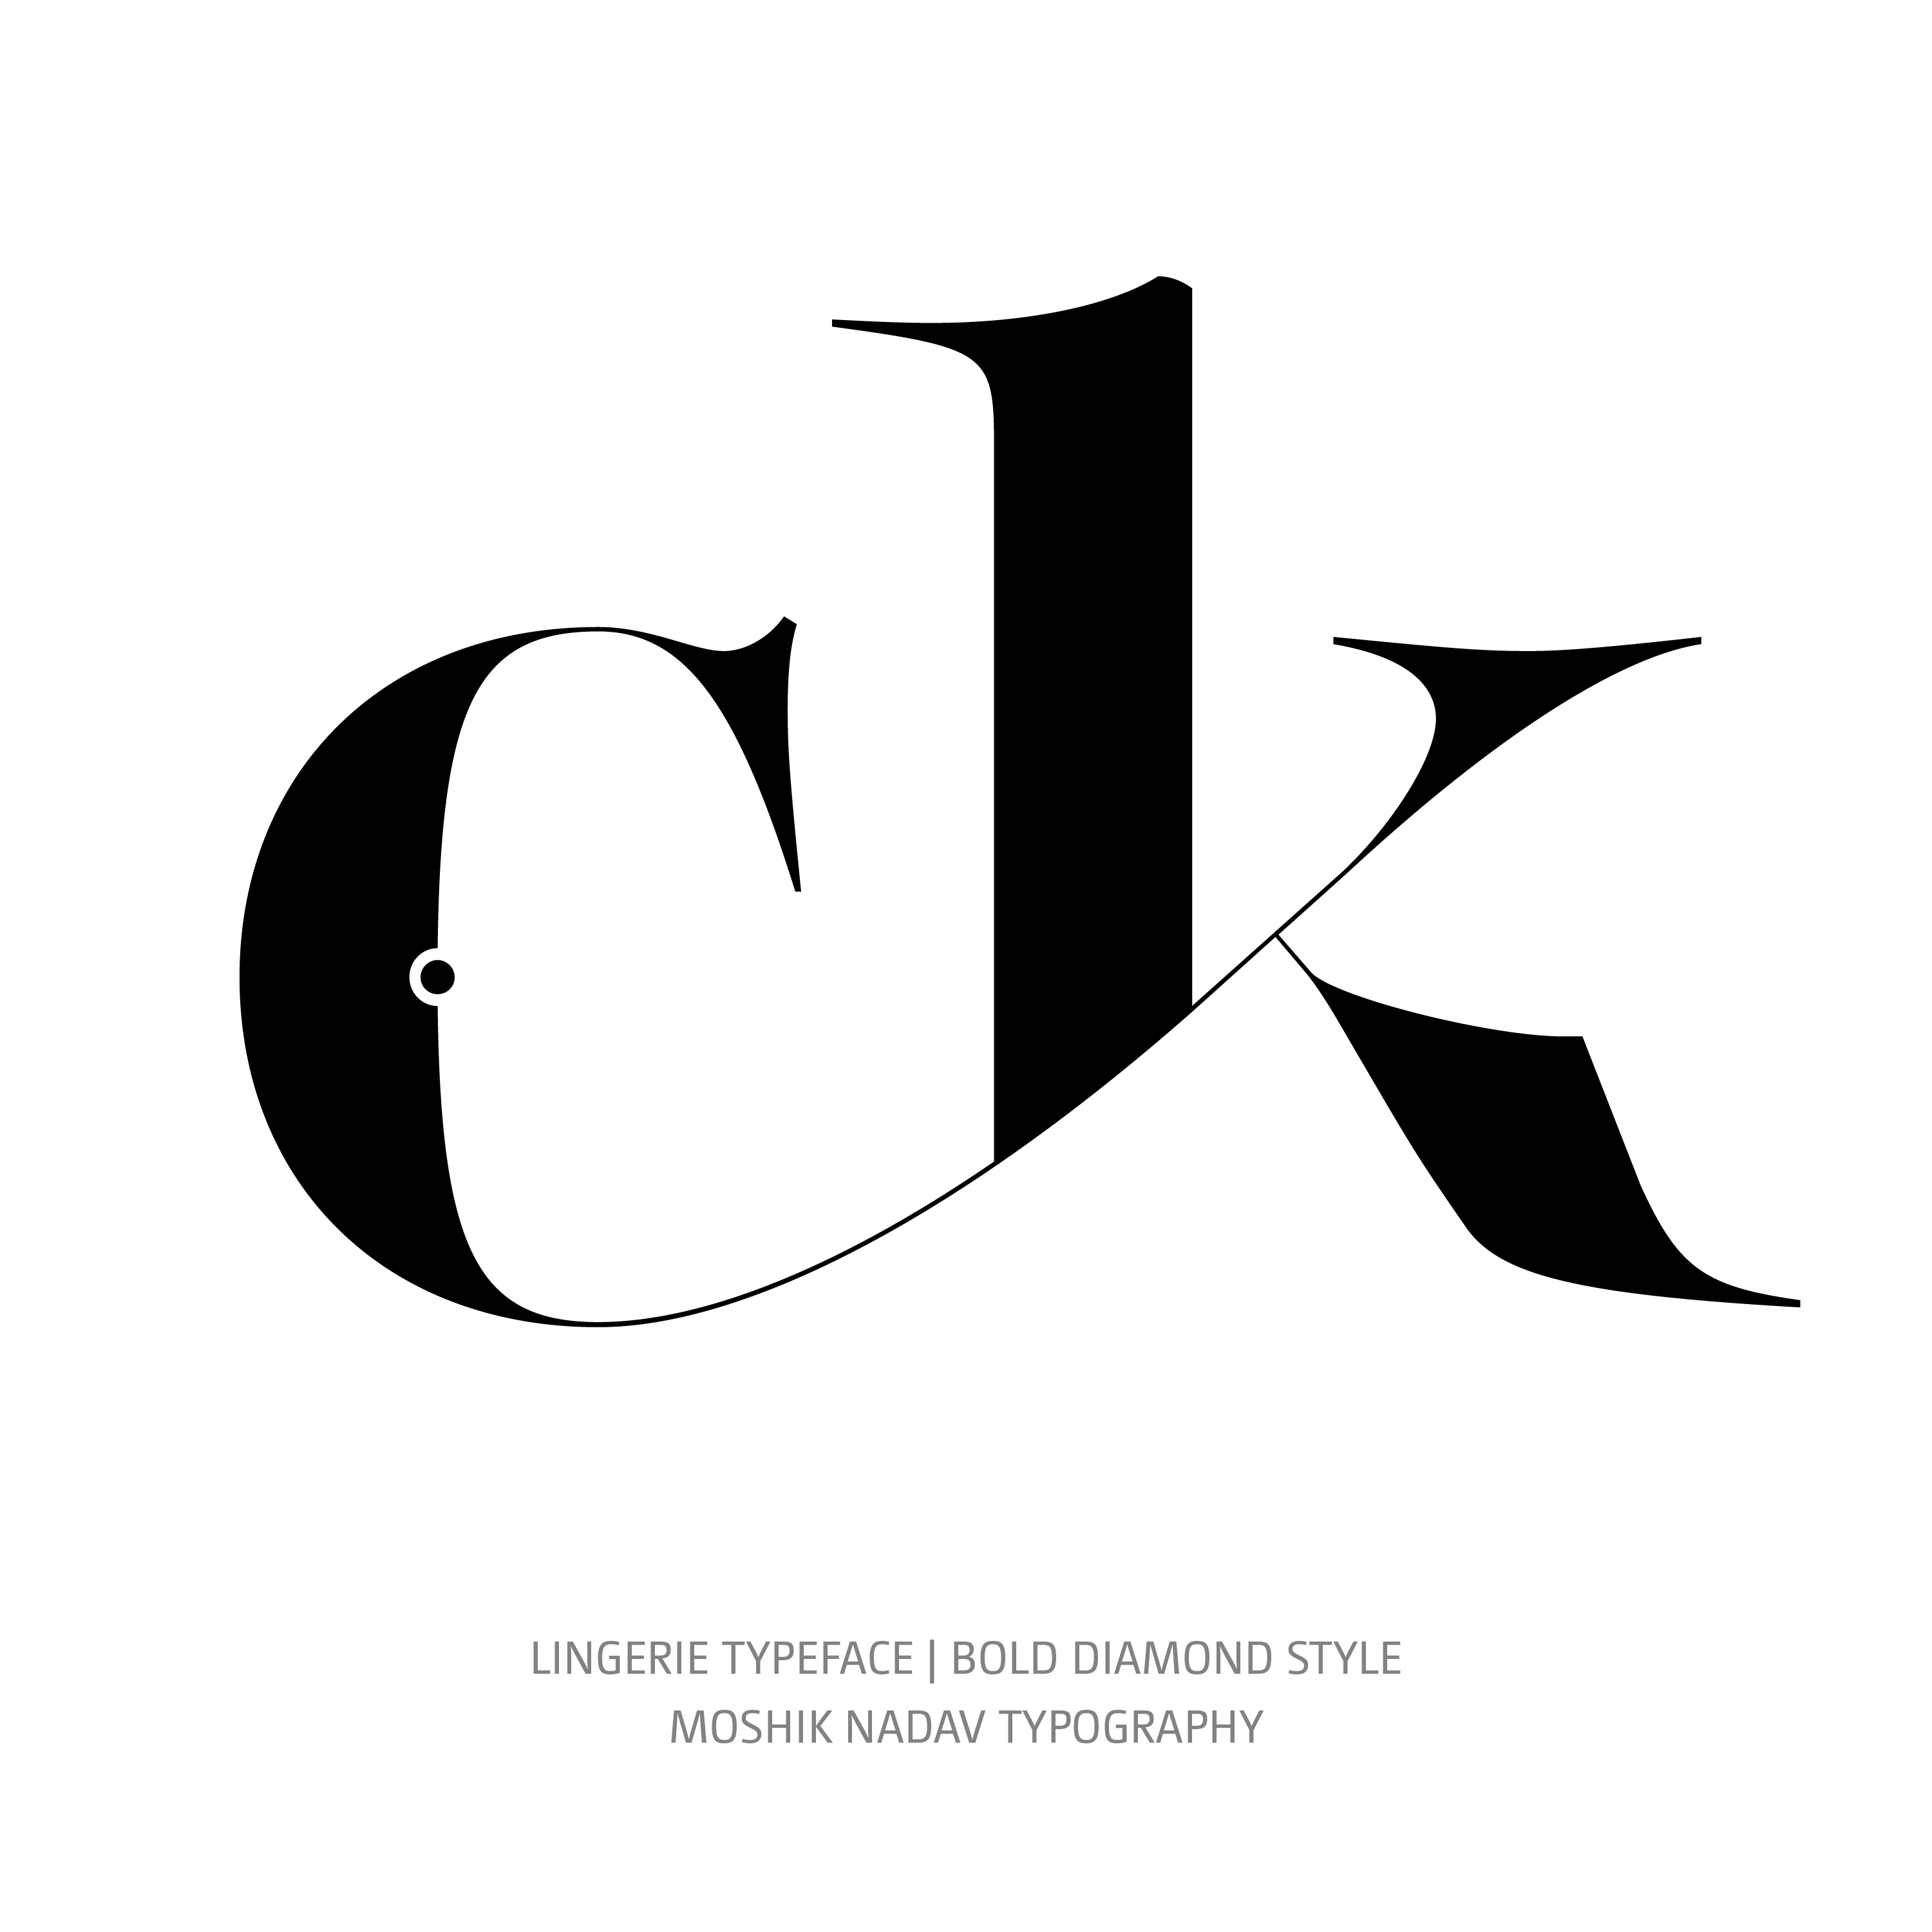 Lingerie Typeface Bold Diamond glyph